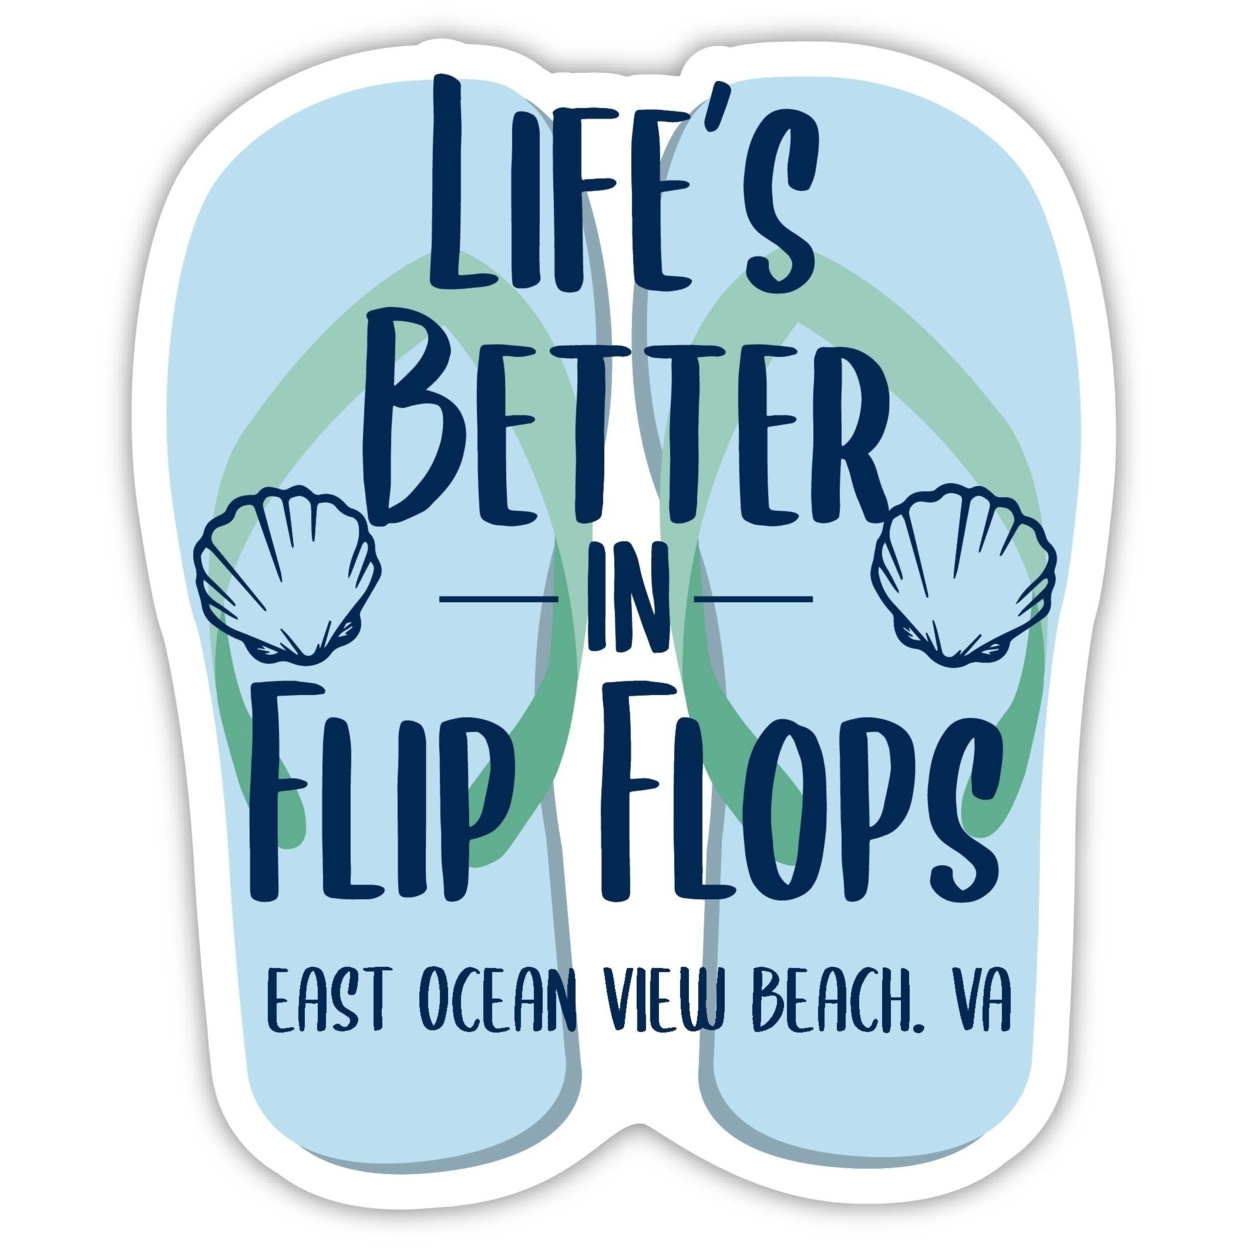 East Ocean View Beach Virginia Souvenir 4 Inch Vinyl Decal Sticker Flip Flop Design